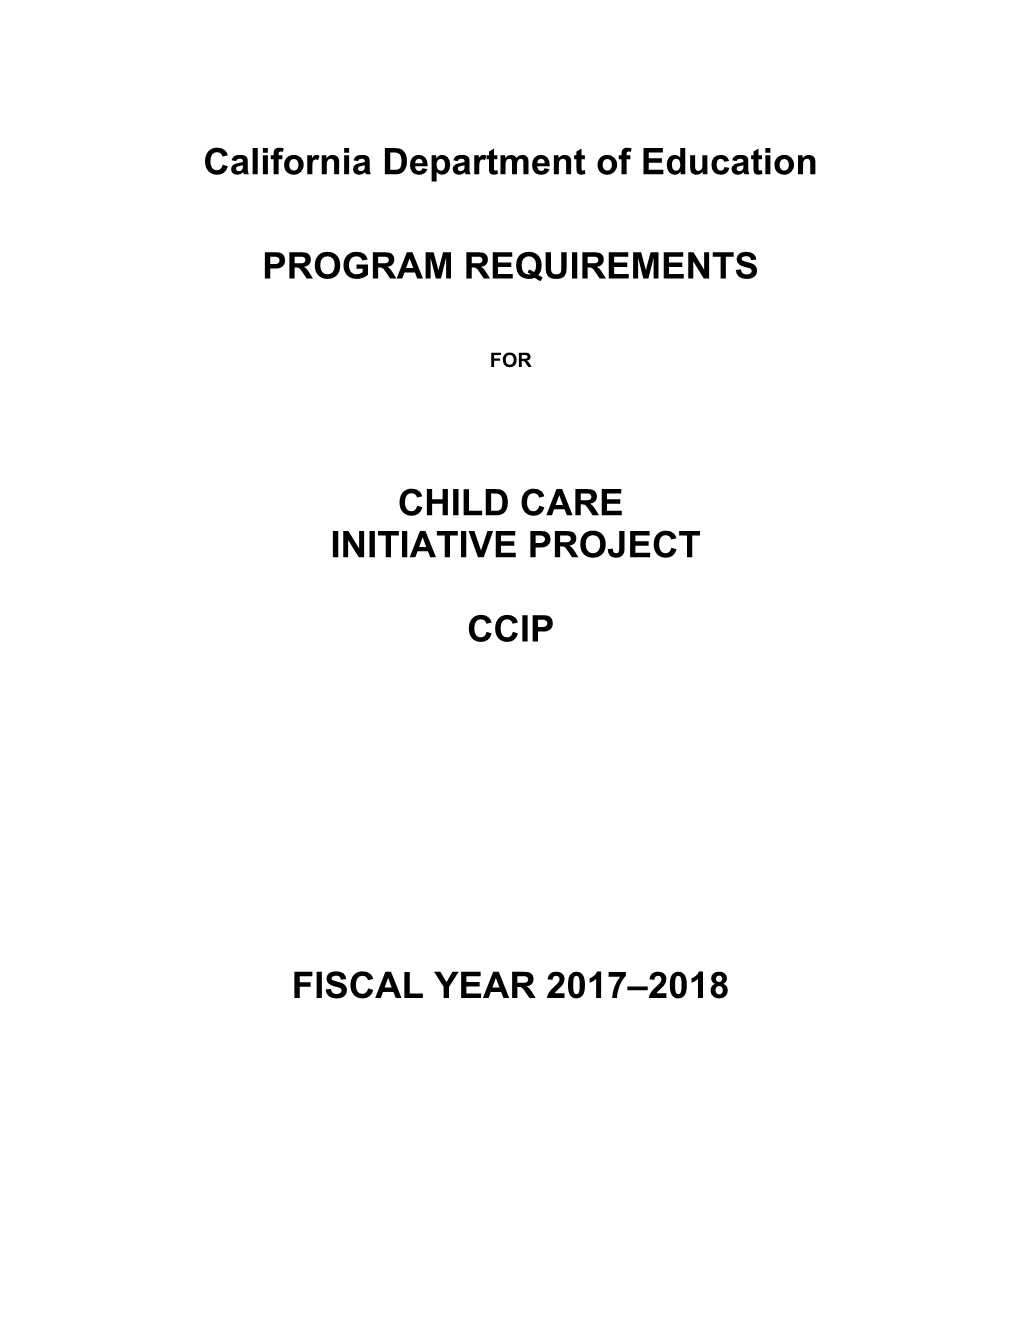 2017-18 CCIP Program Requirements - Child Development (CA Dept of Education)